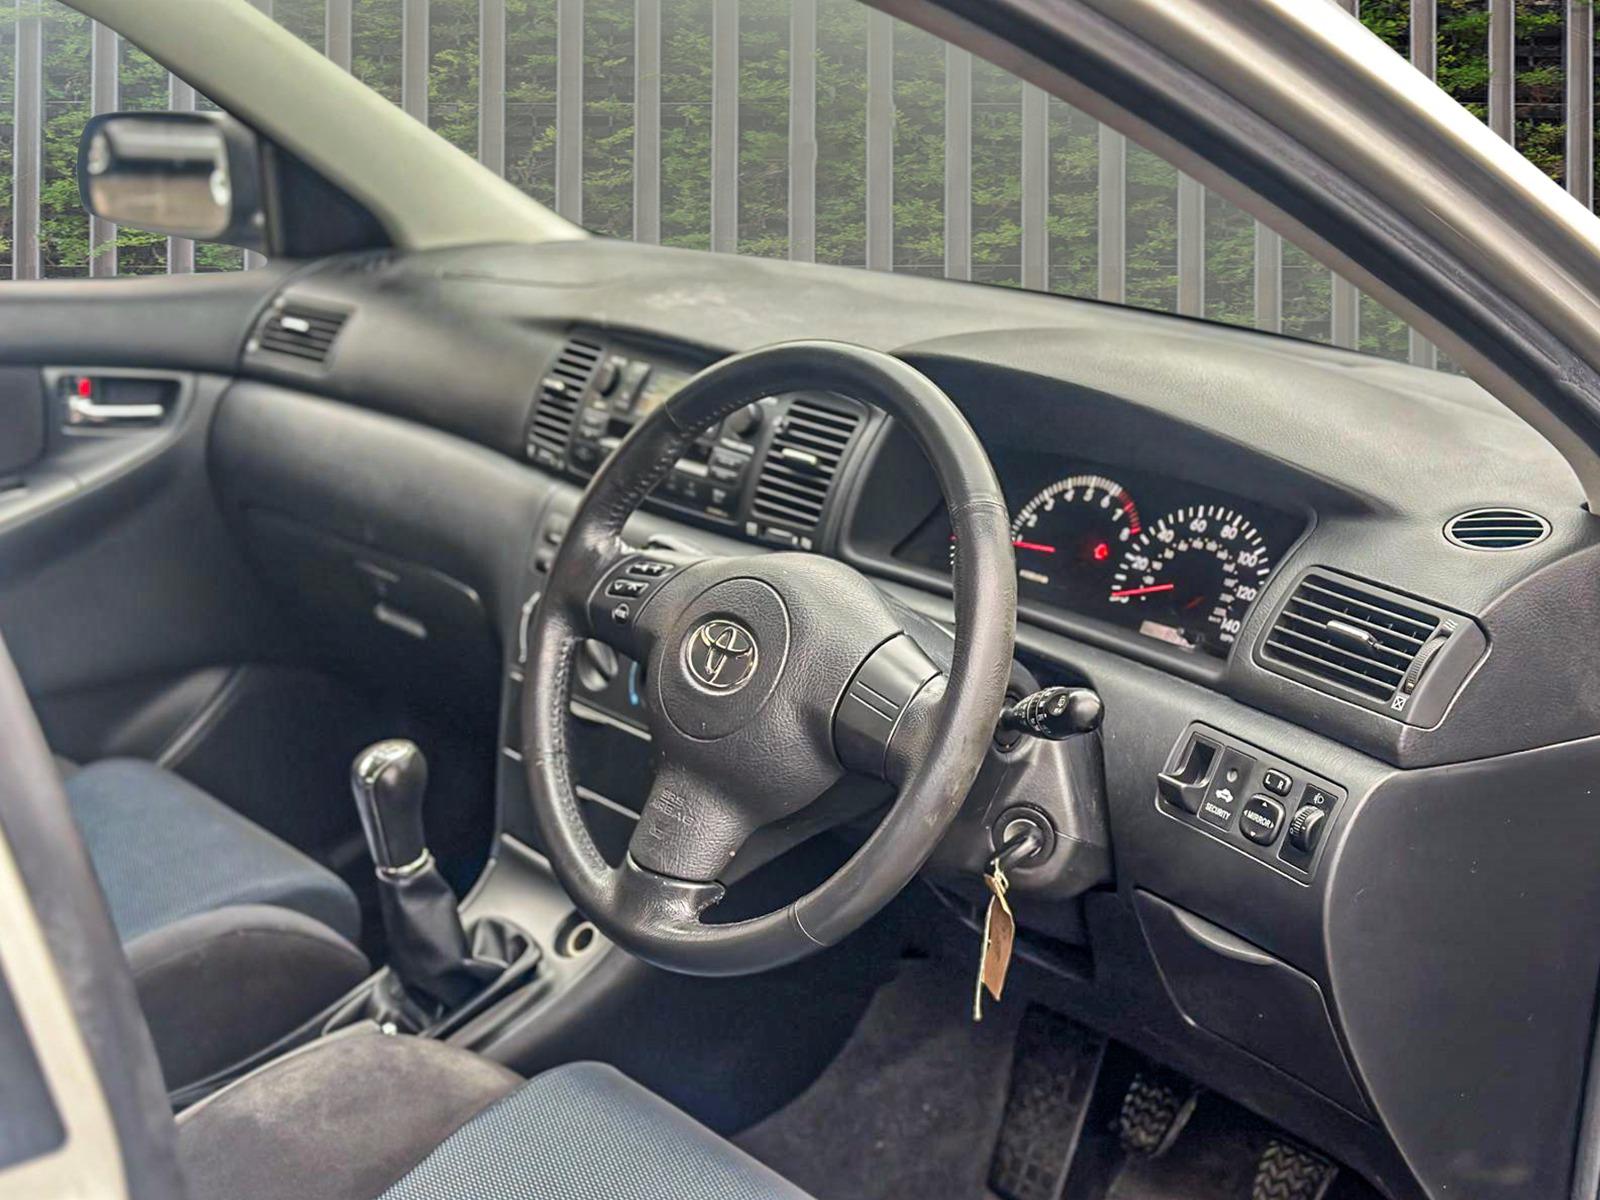 Toyota Corolla 1.4 VVT-i T3 Hatchback 5dr Petrol Manual (159 g/km, 95 bhp)